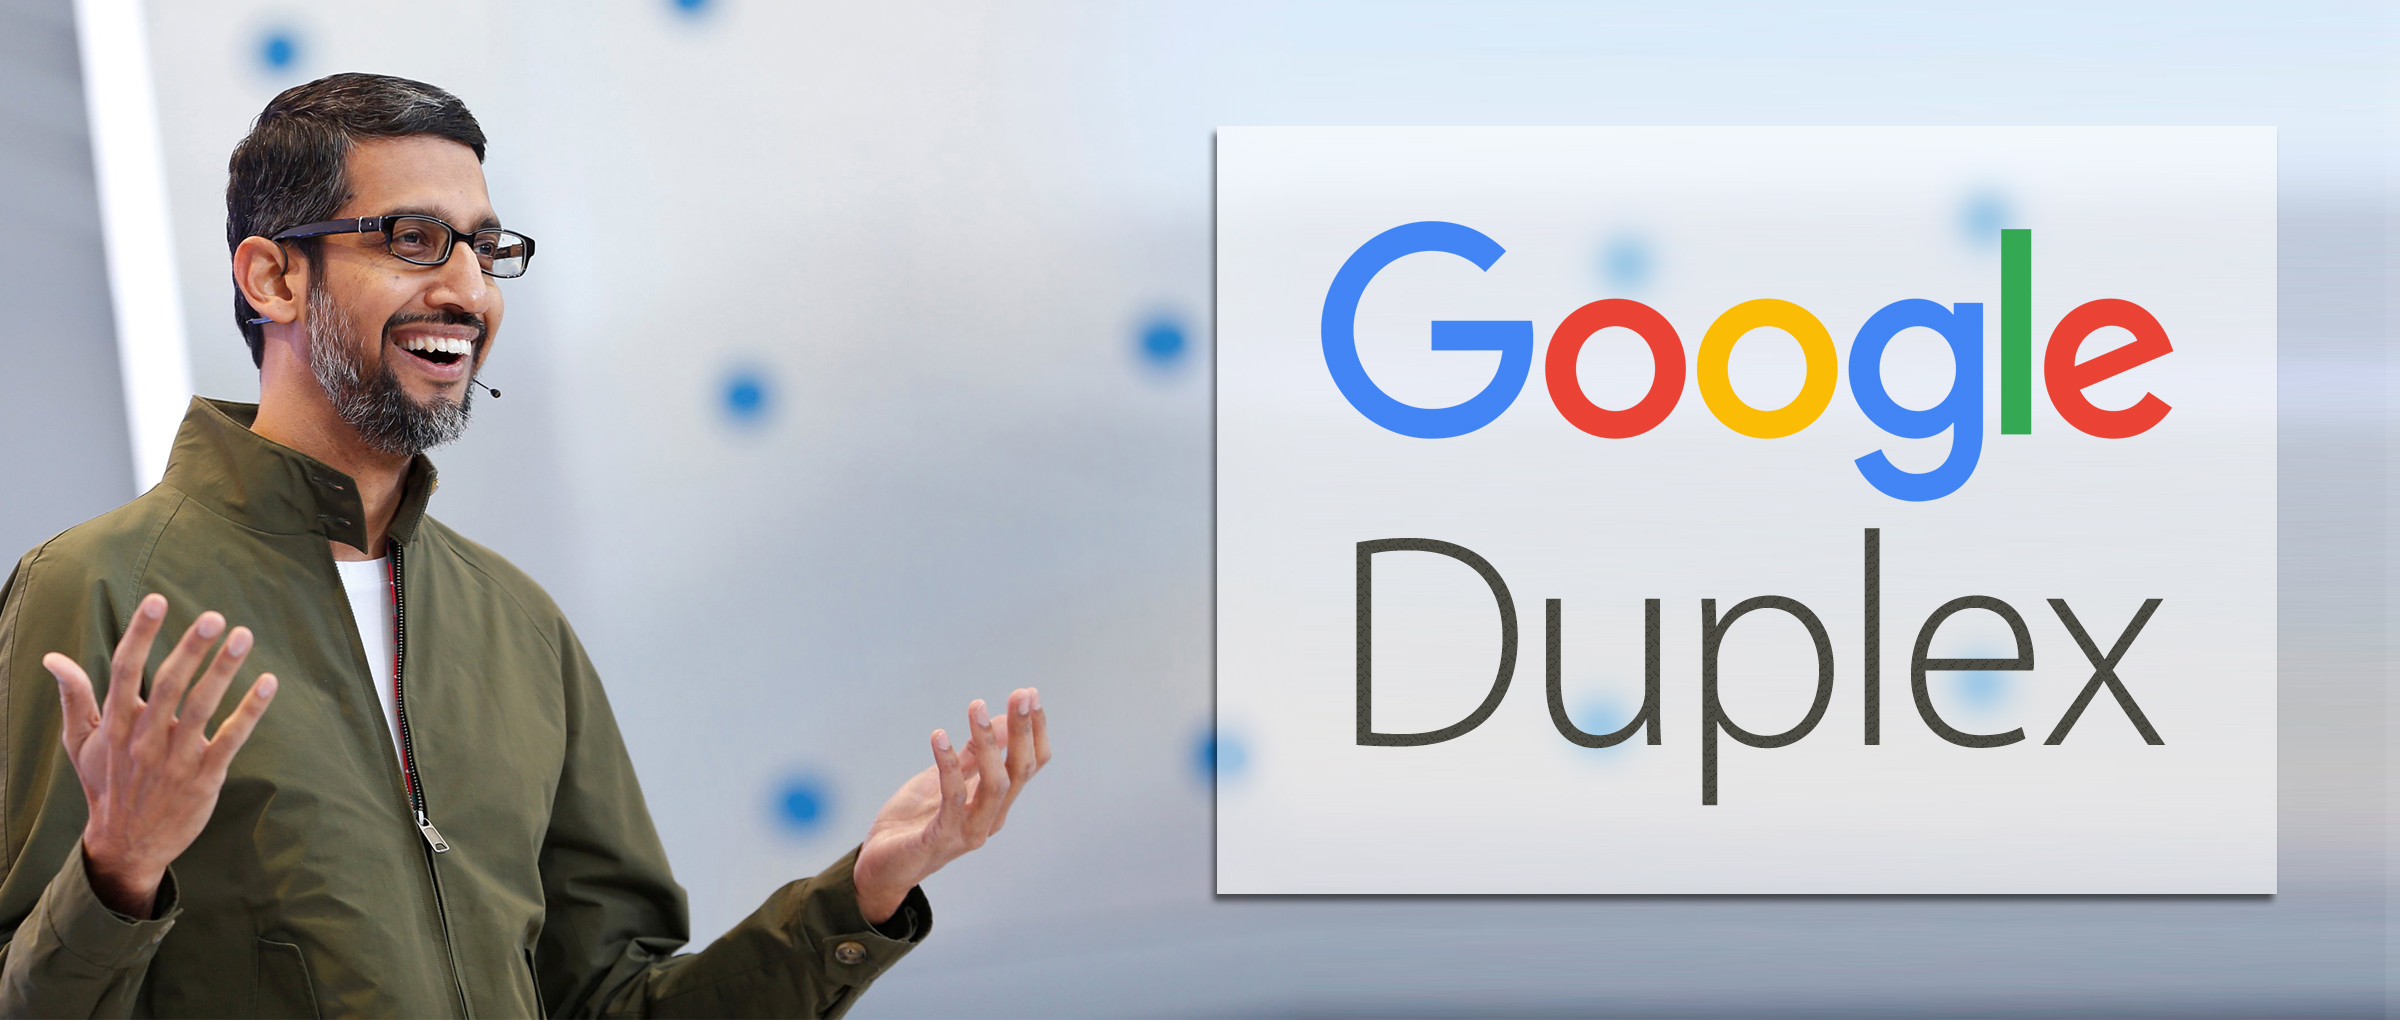 Google Duplex è in fase di test, anche nei call center, ma suscita problemi  di natura etica